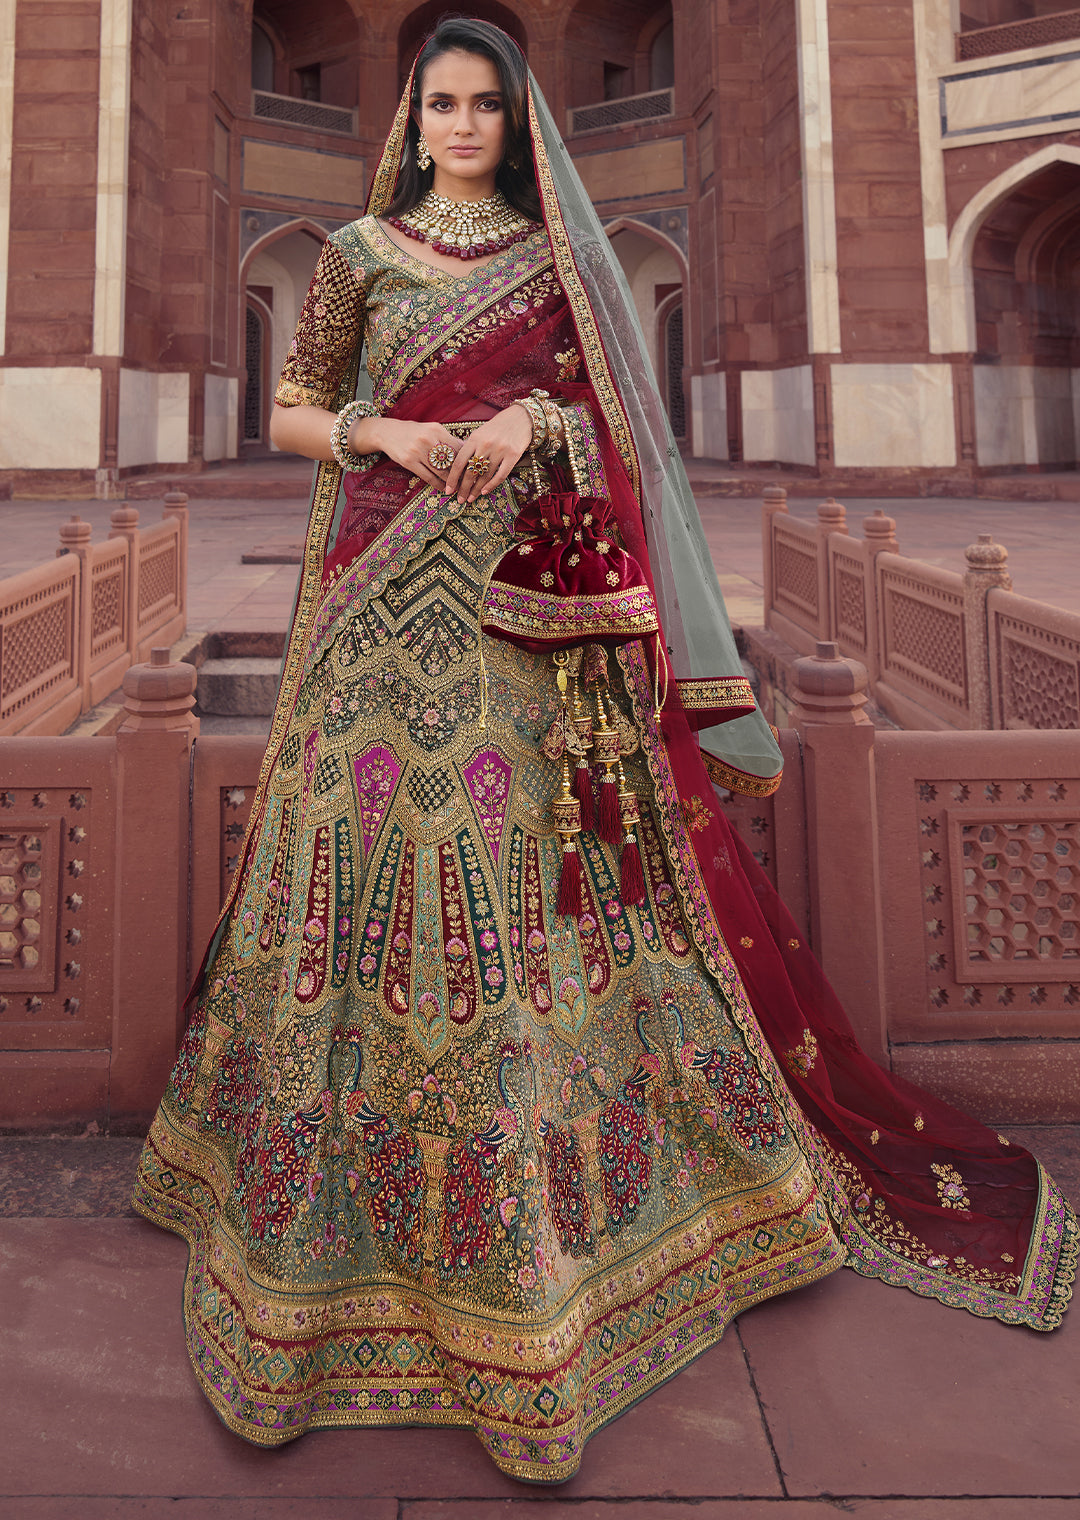 Indian Dress Gold Color Bridal Lehenga 1104